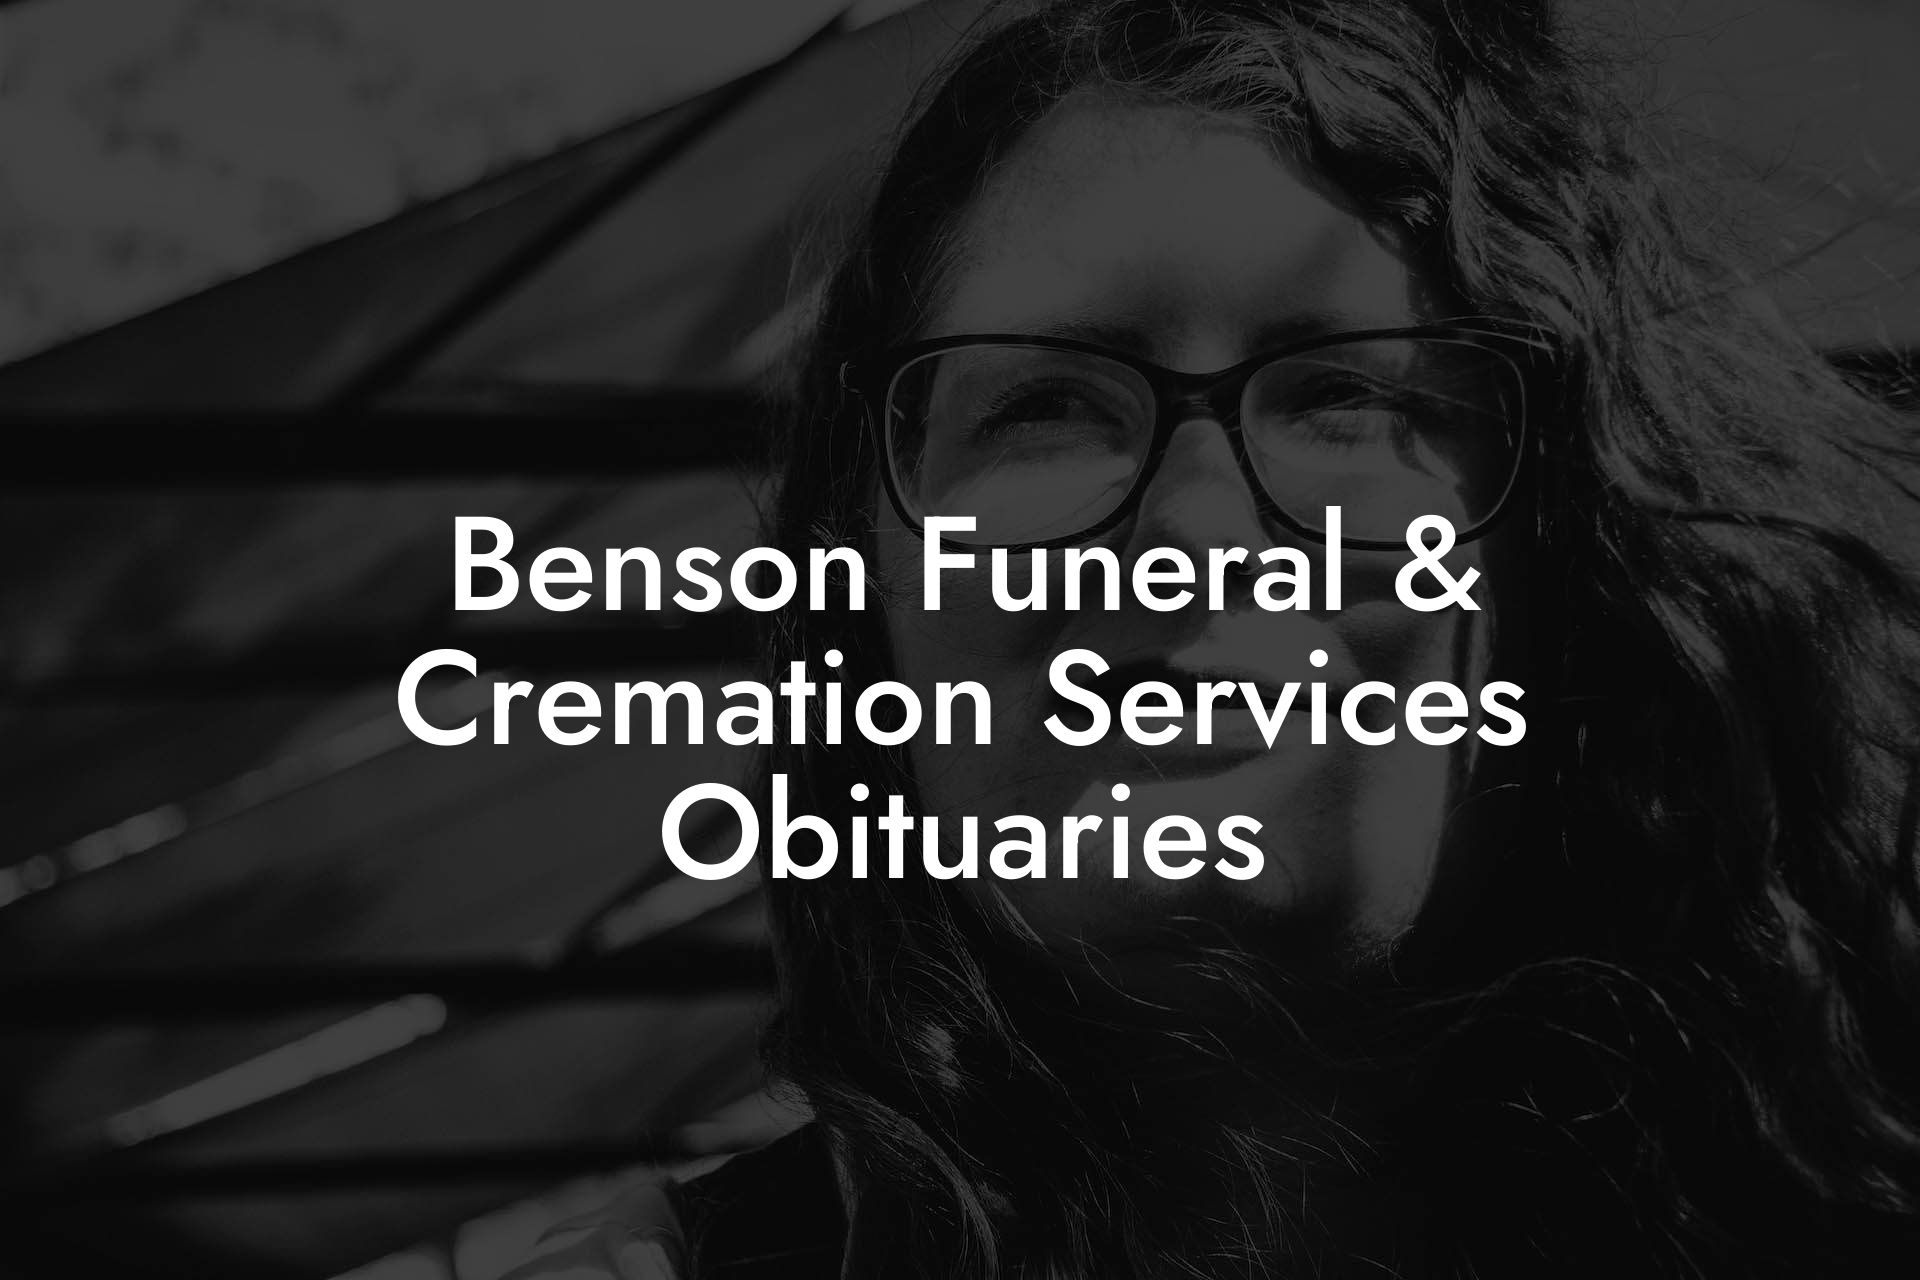 Benson Funeral & Cremation Services Obituaries